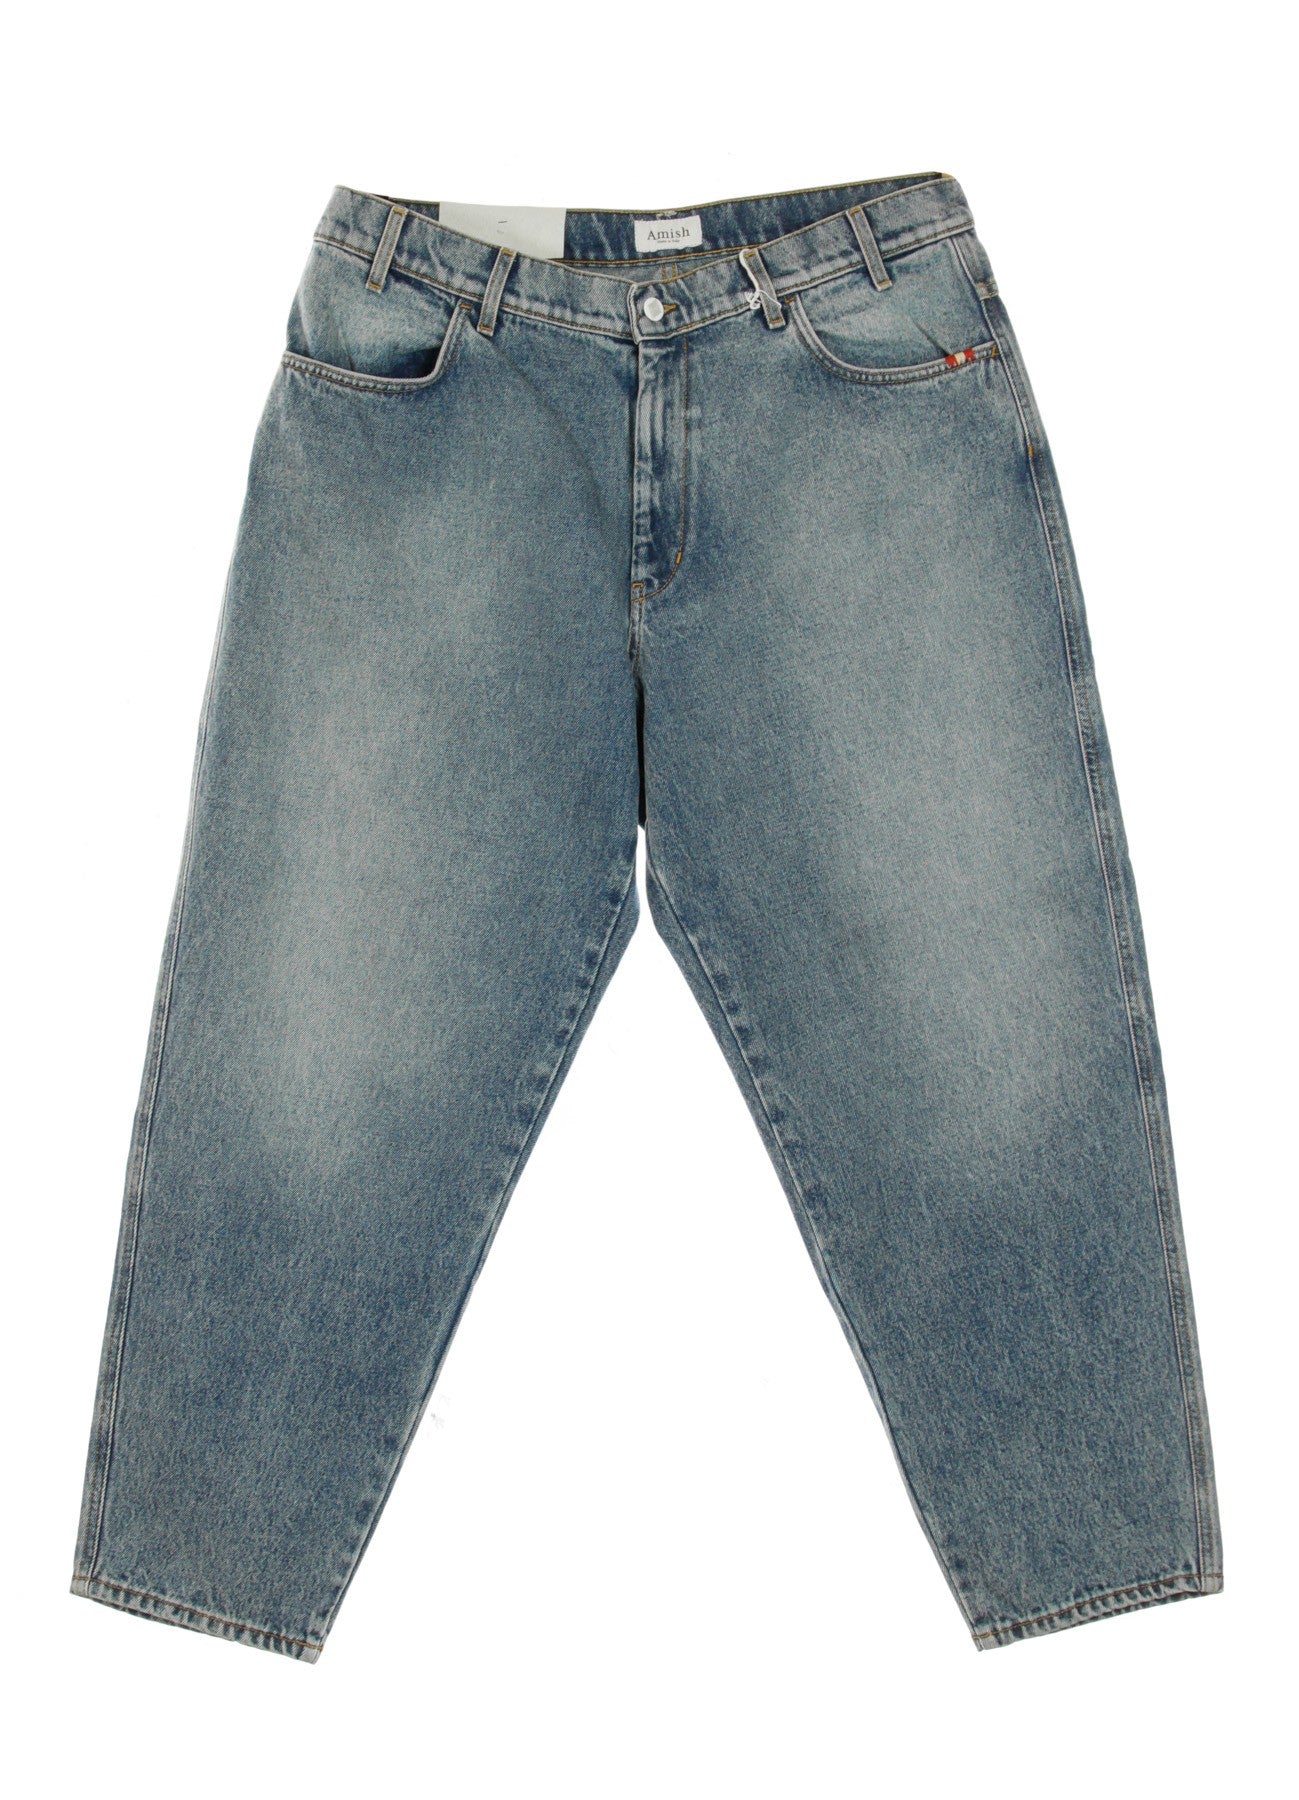 Bernie Denim Vintage Used Men's Jeans